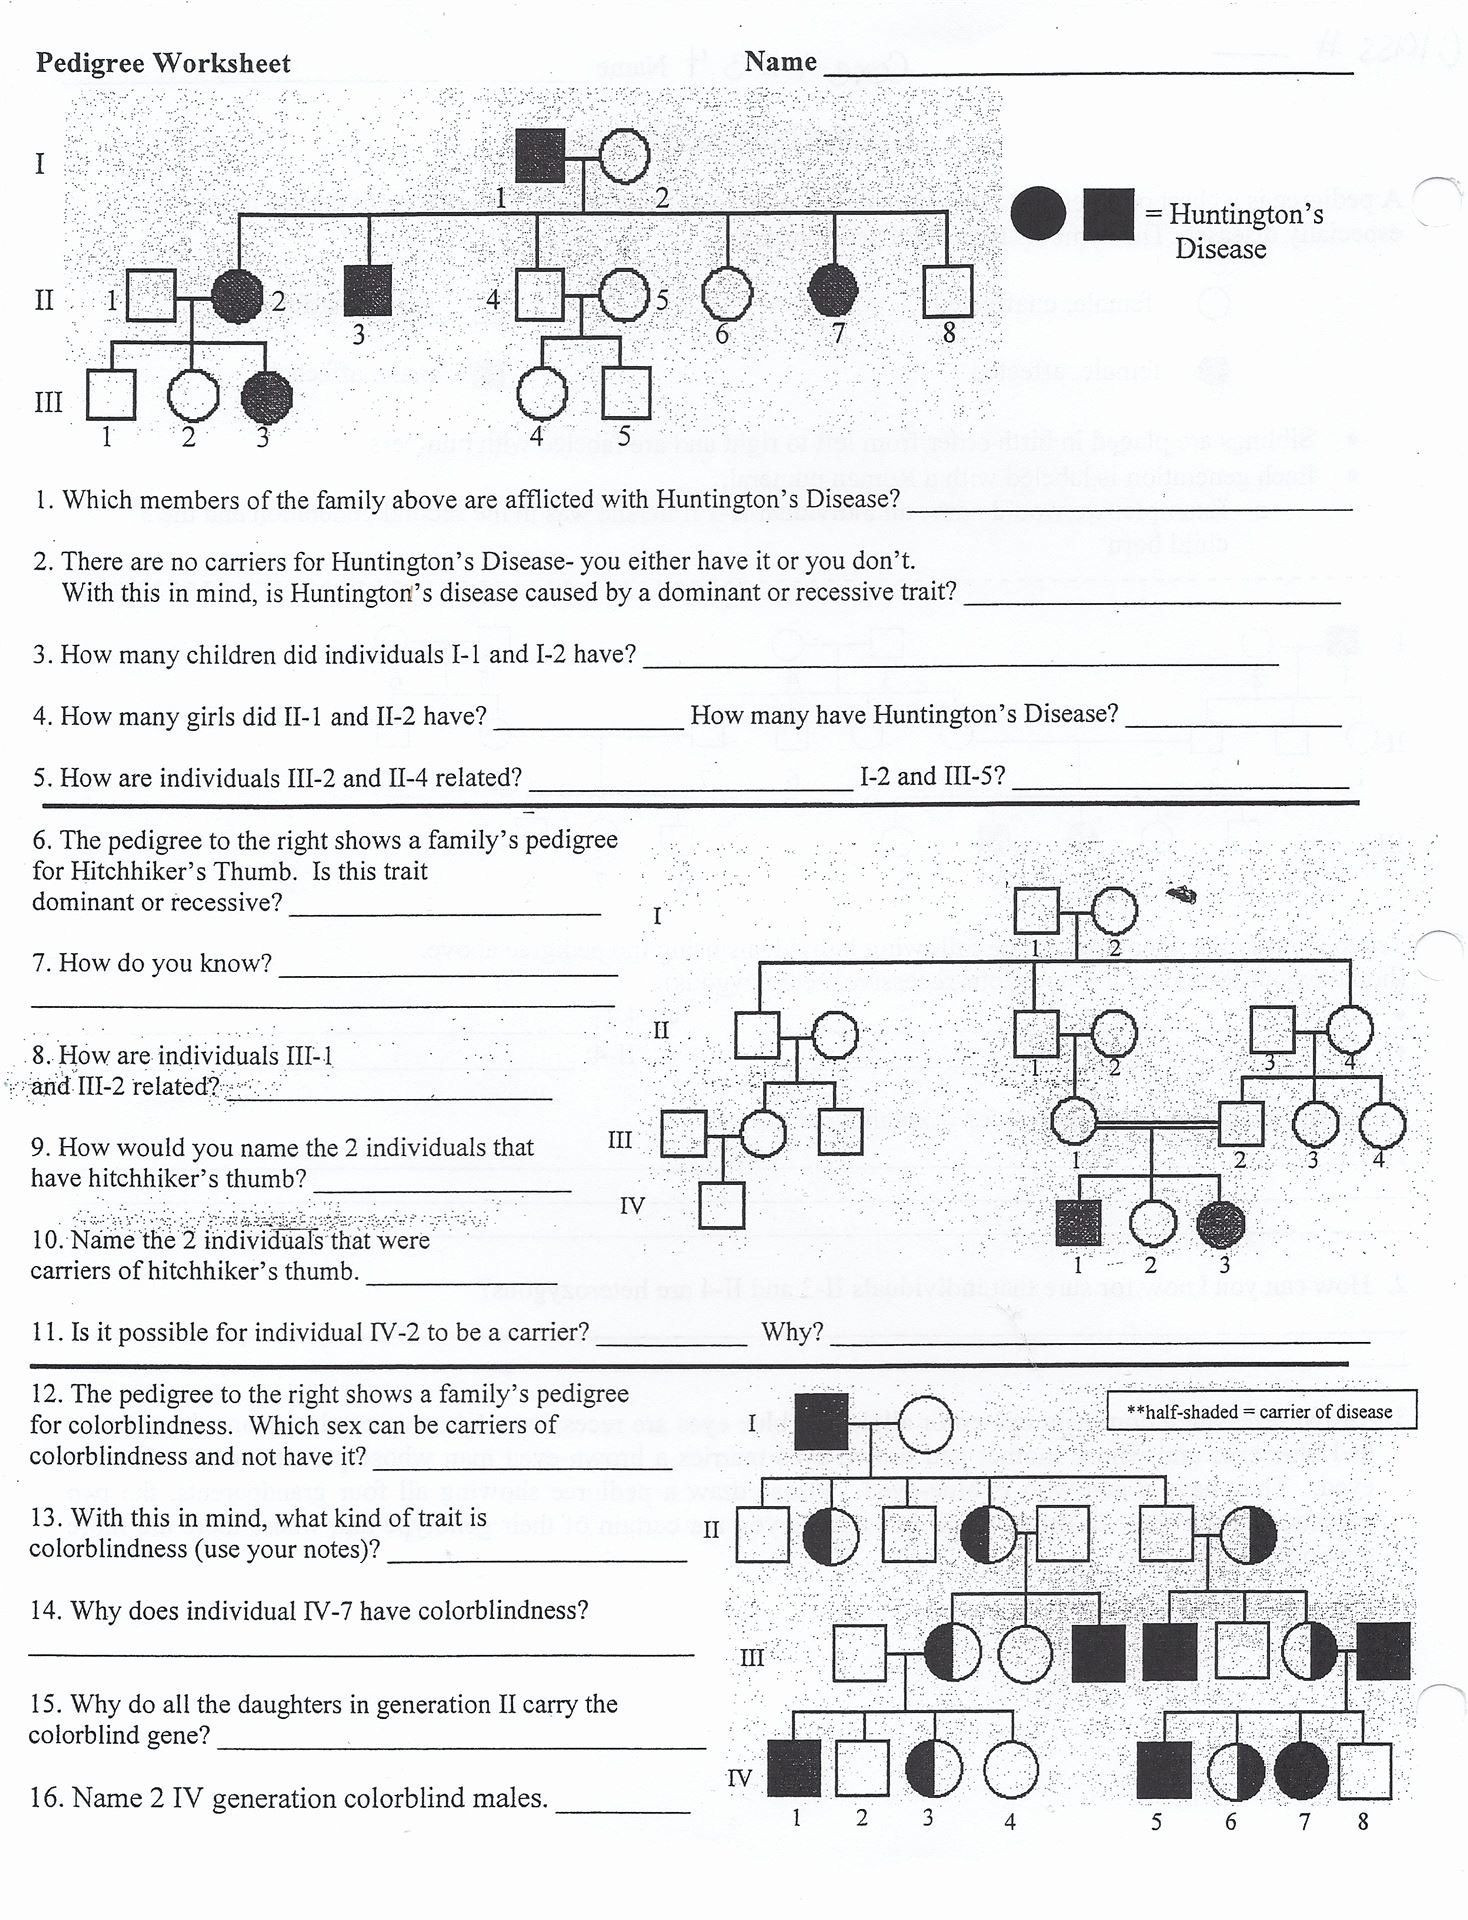 Genetics Worksheet Middle School Genetics Worksheet Middle School Fresh Making It as A Middle